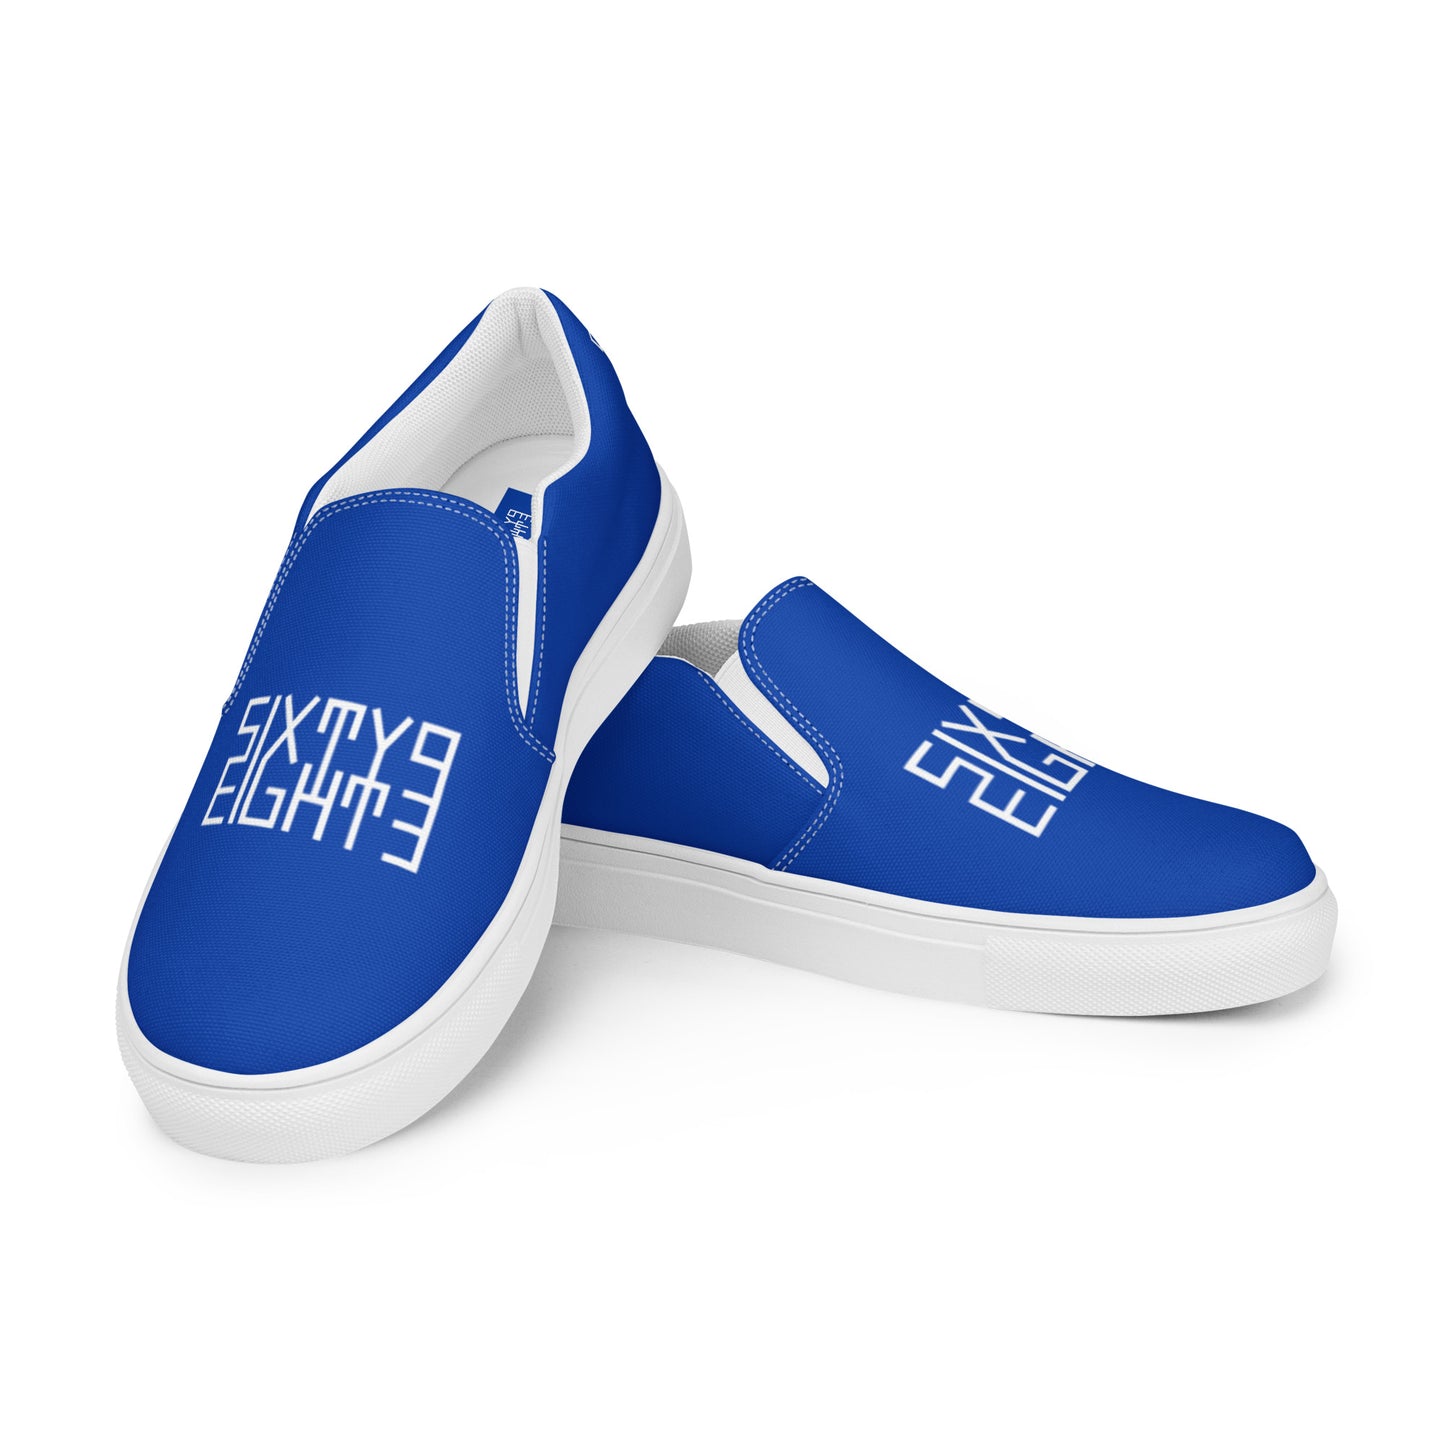 Sixty Eight 93 Logo White & Blue Women's Slip On Shoes